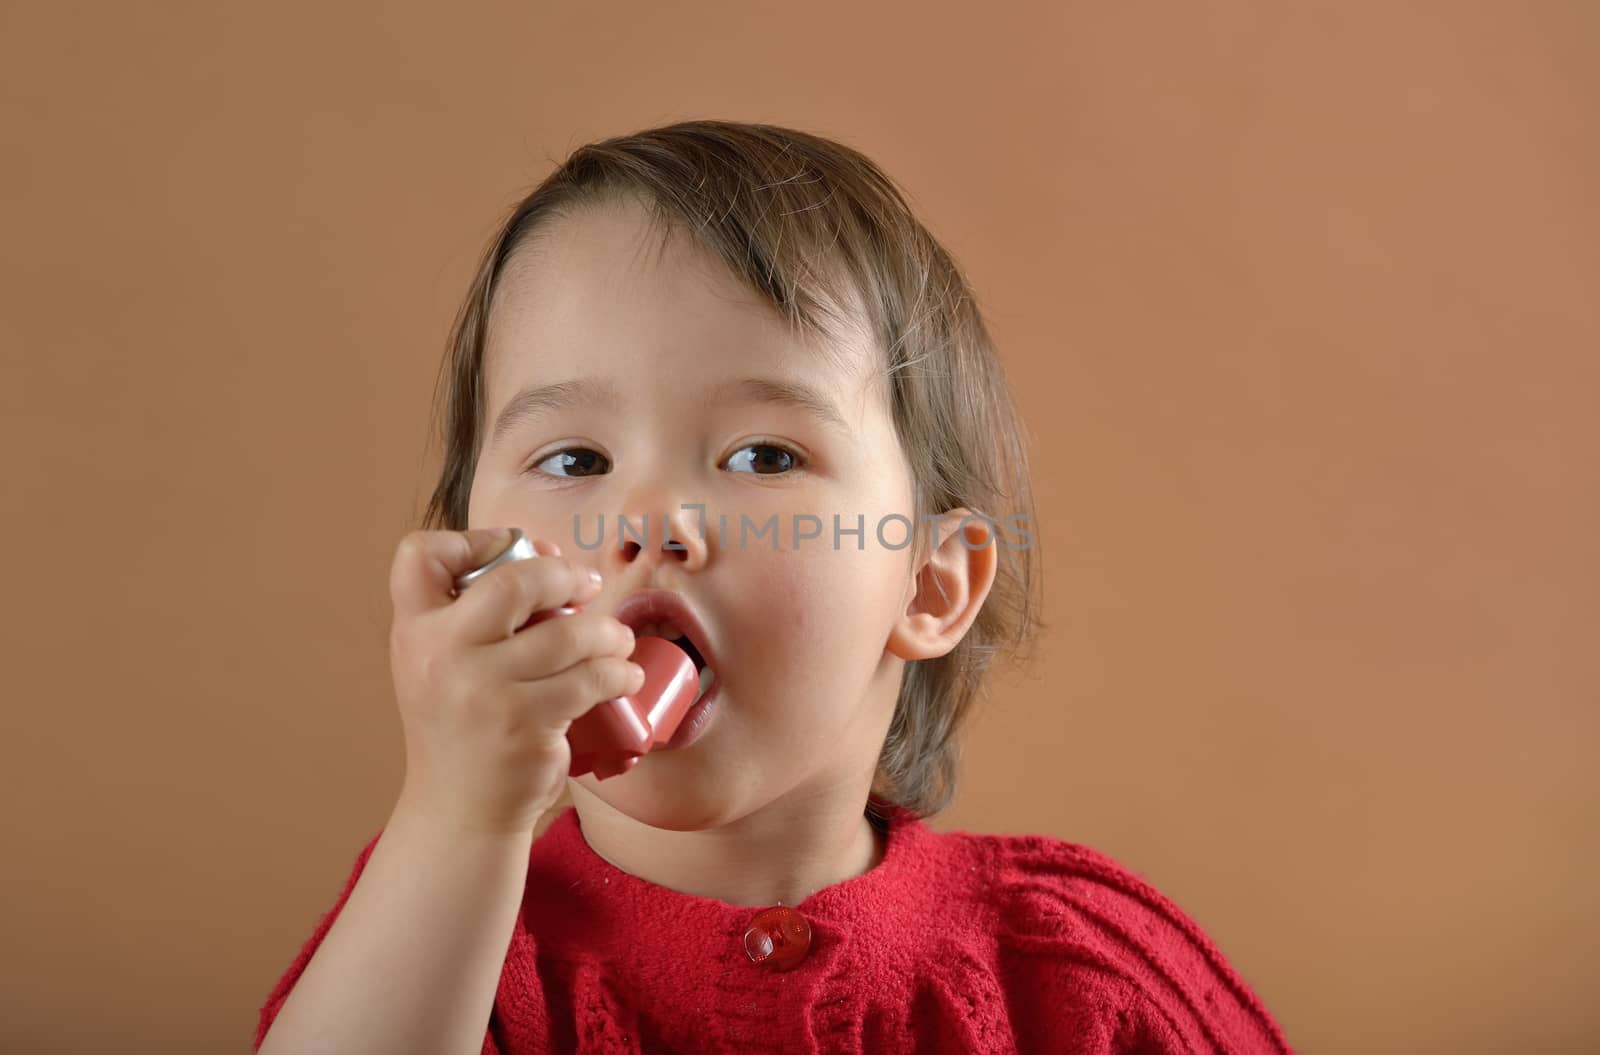 Little girl breathing asthmatic medicine health-care inhaler